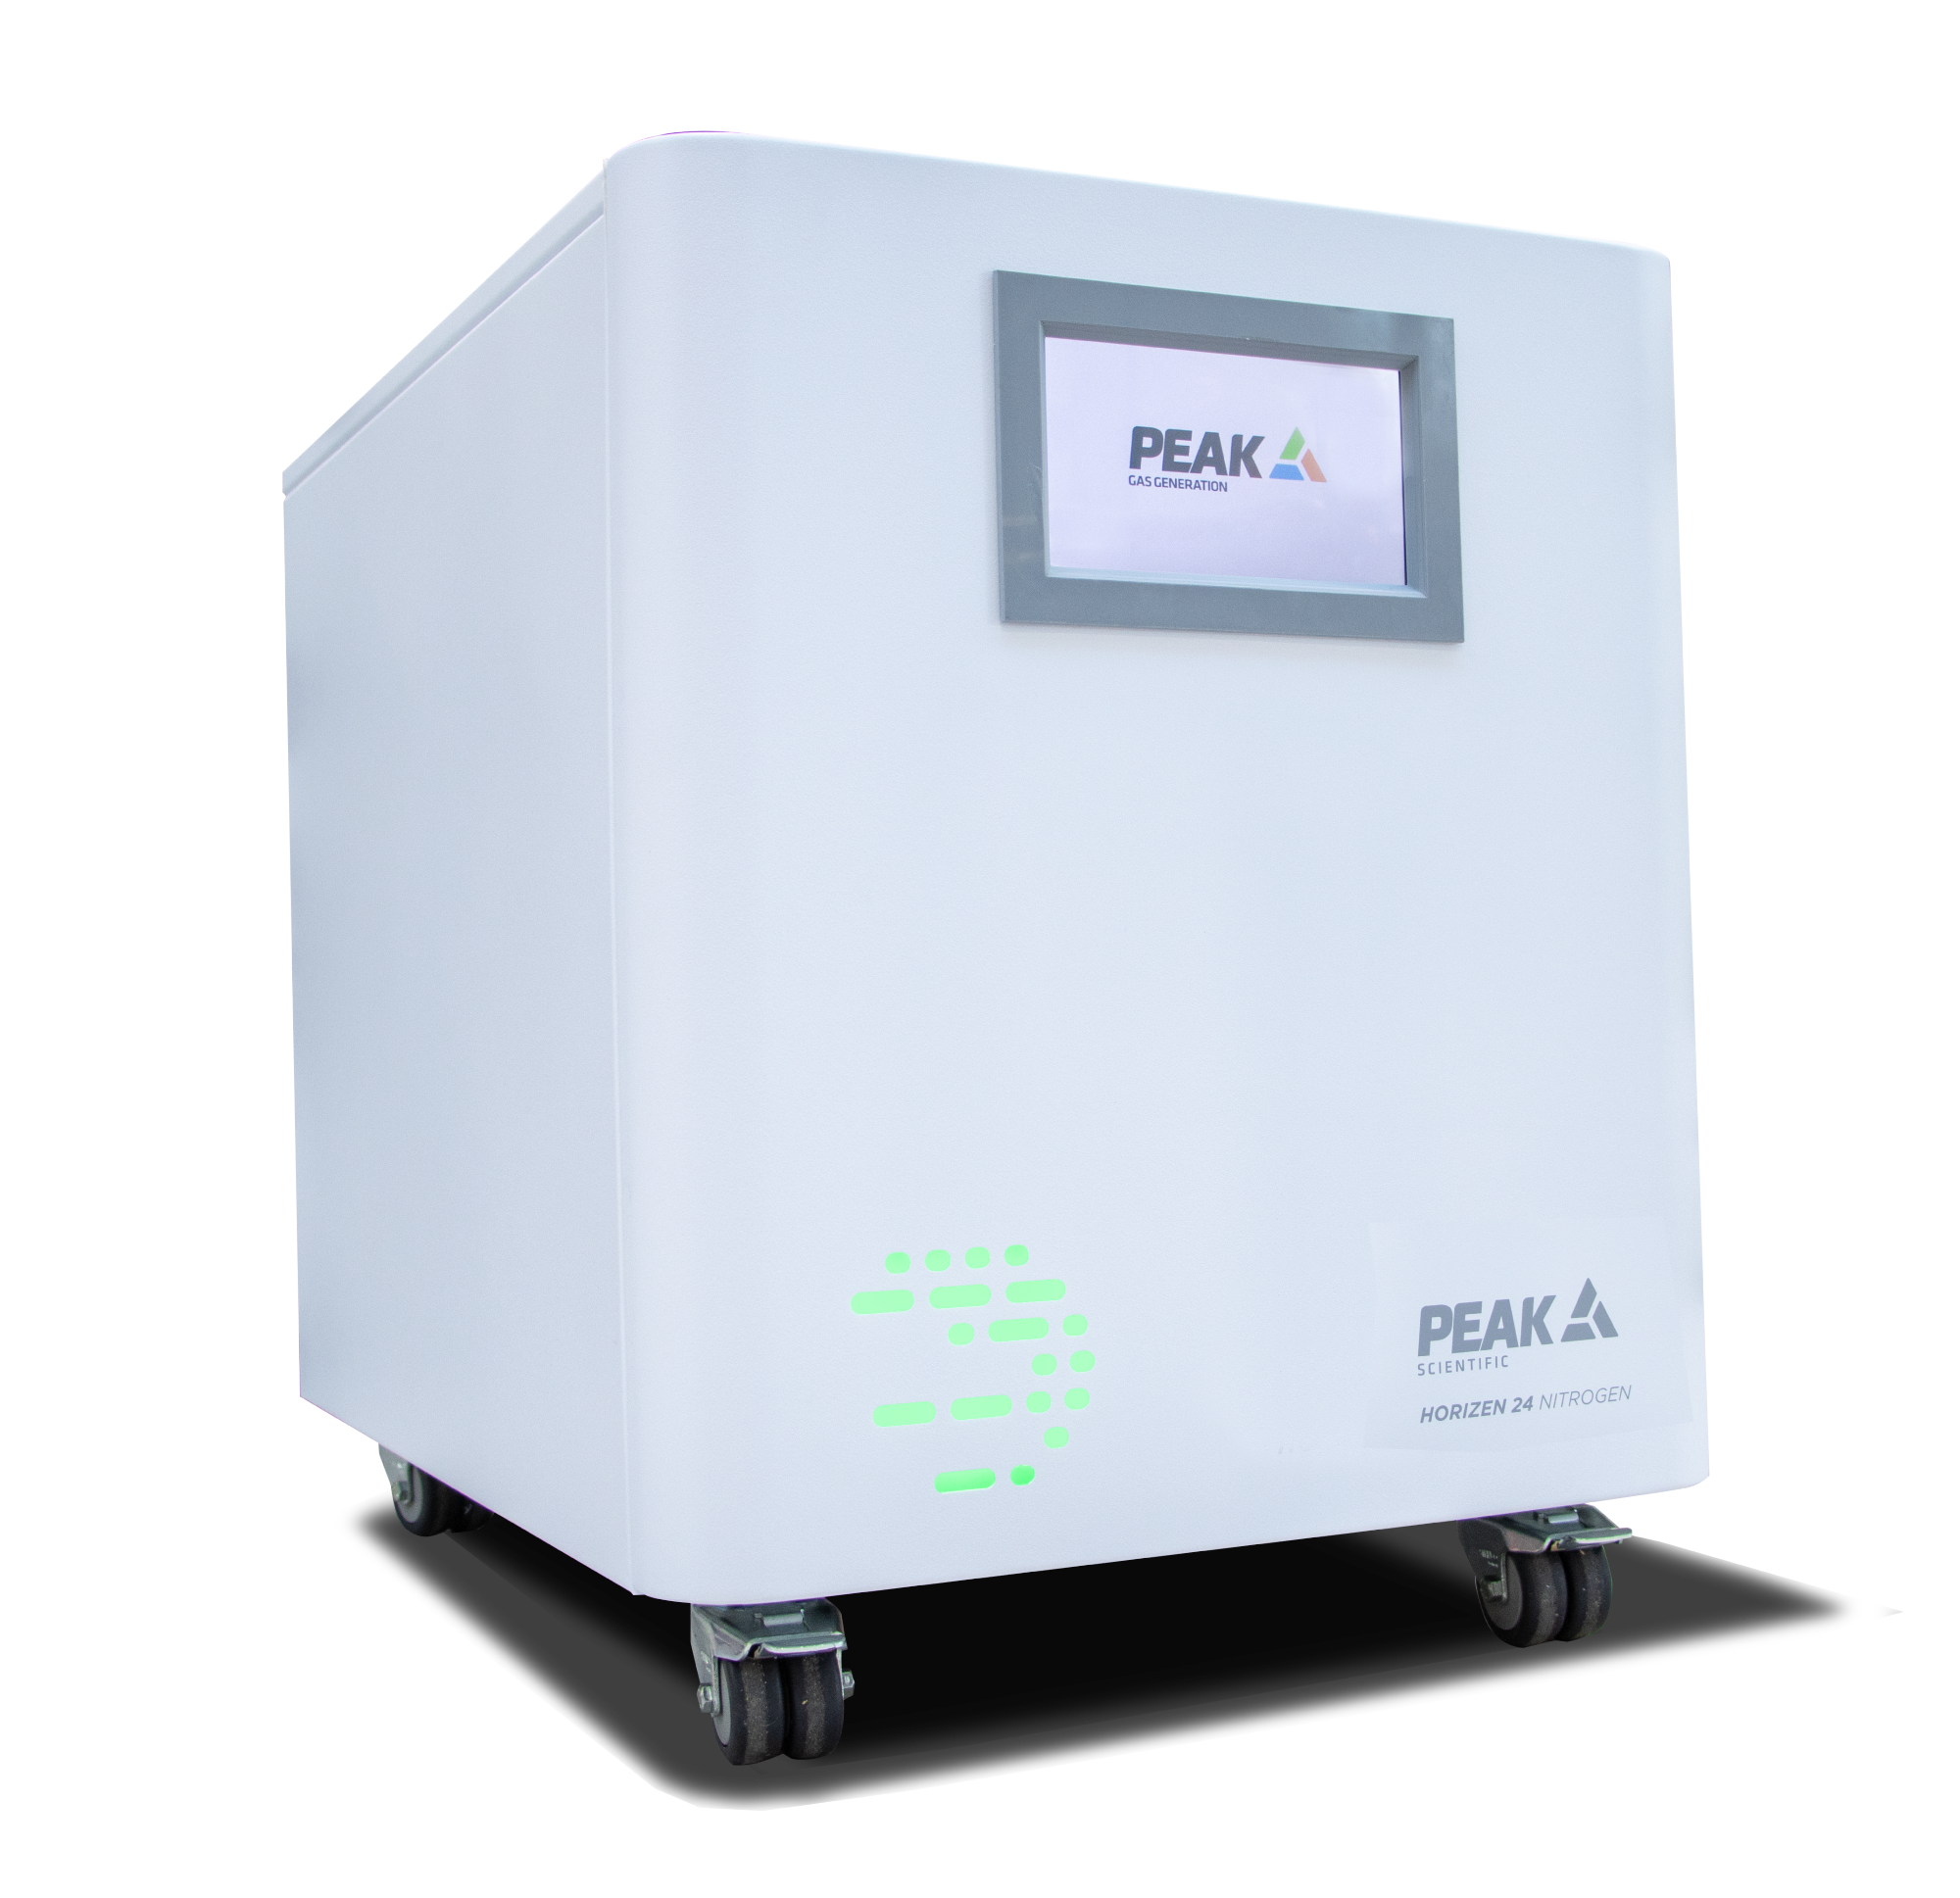 PEAK Scientific Launches the Most Energy-efficient Nitrogen Generator On the Market